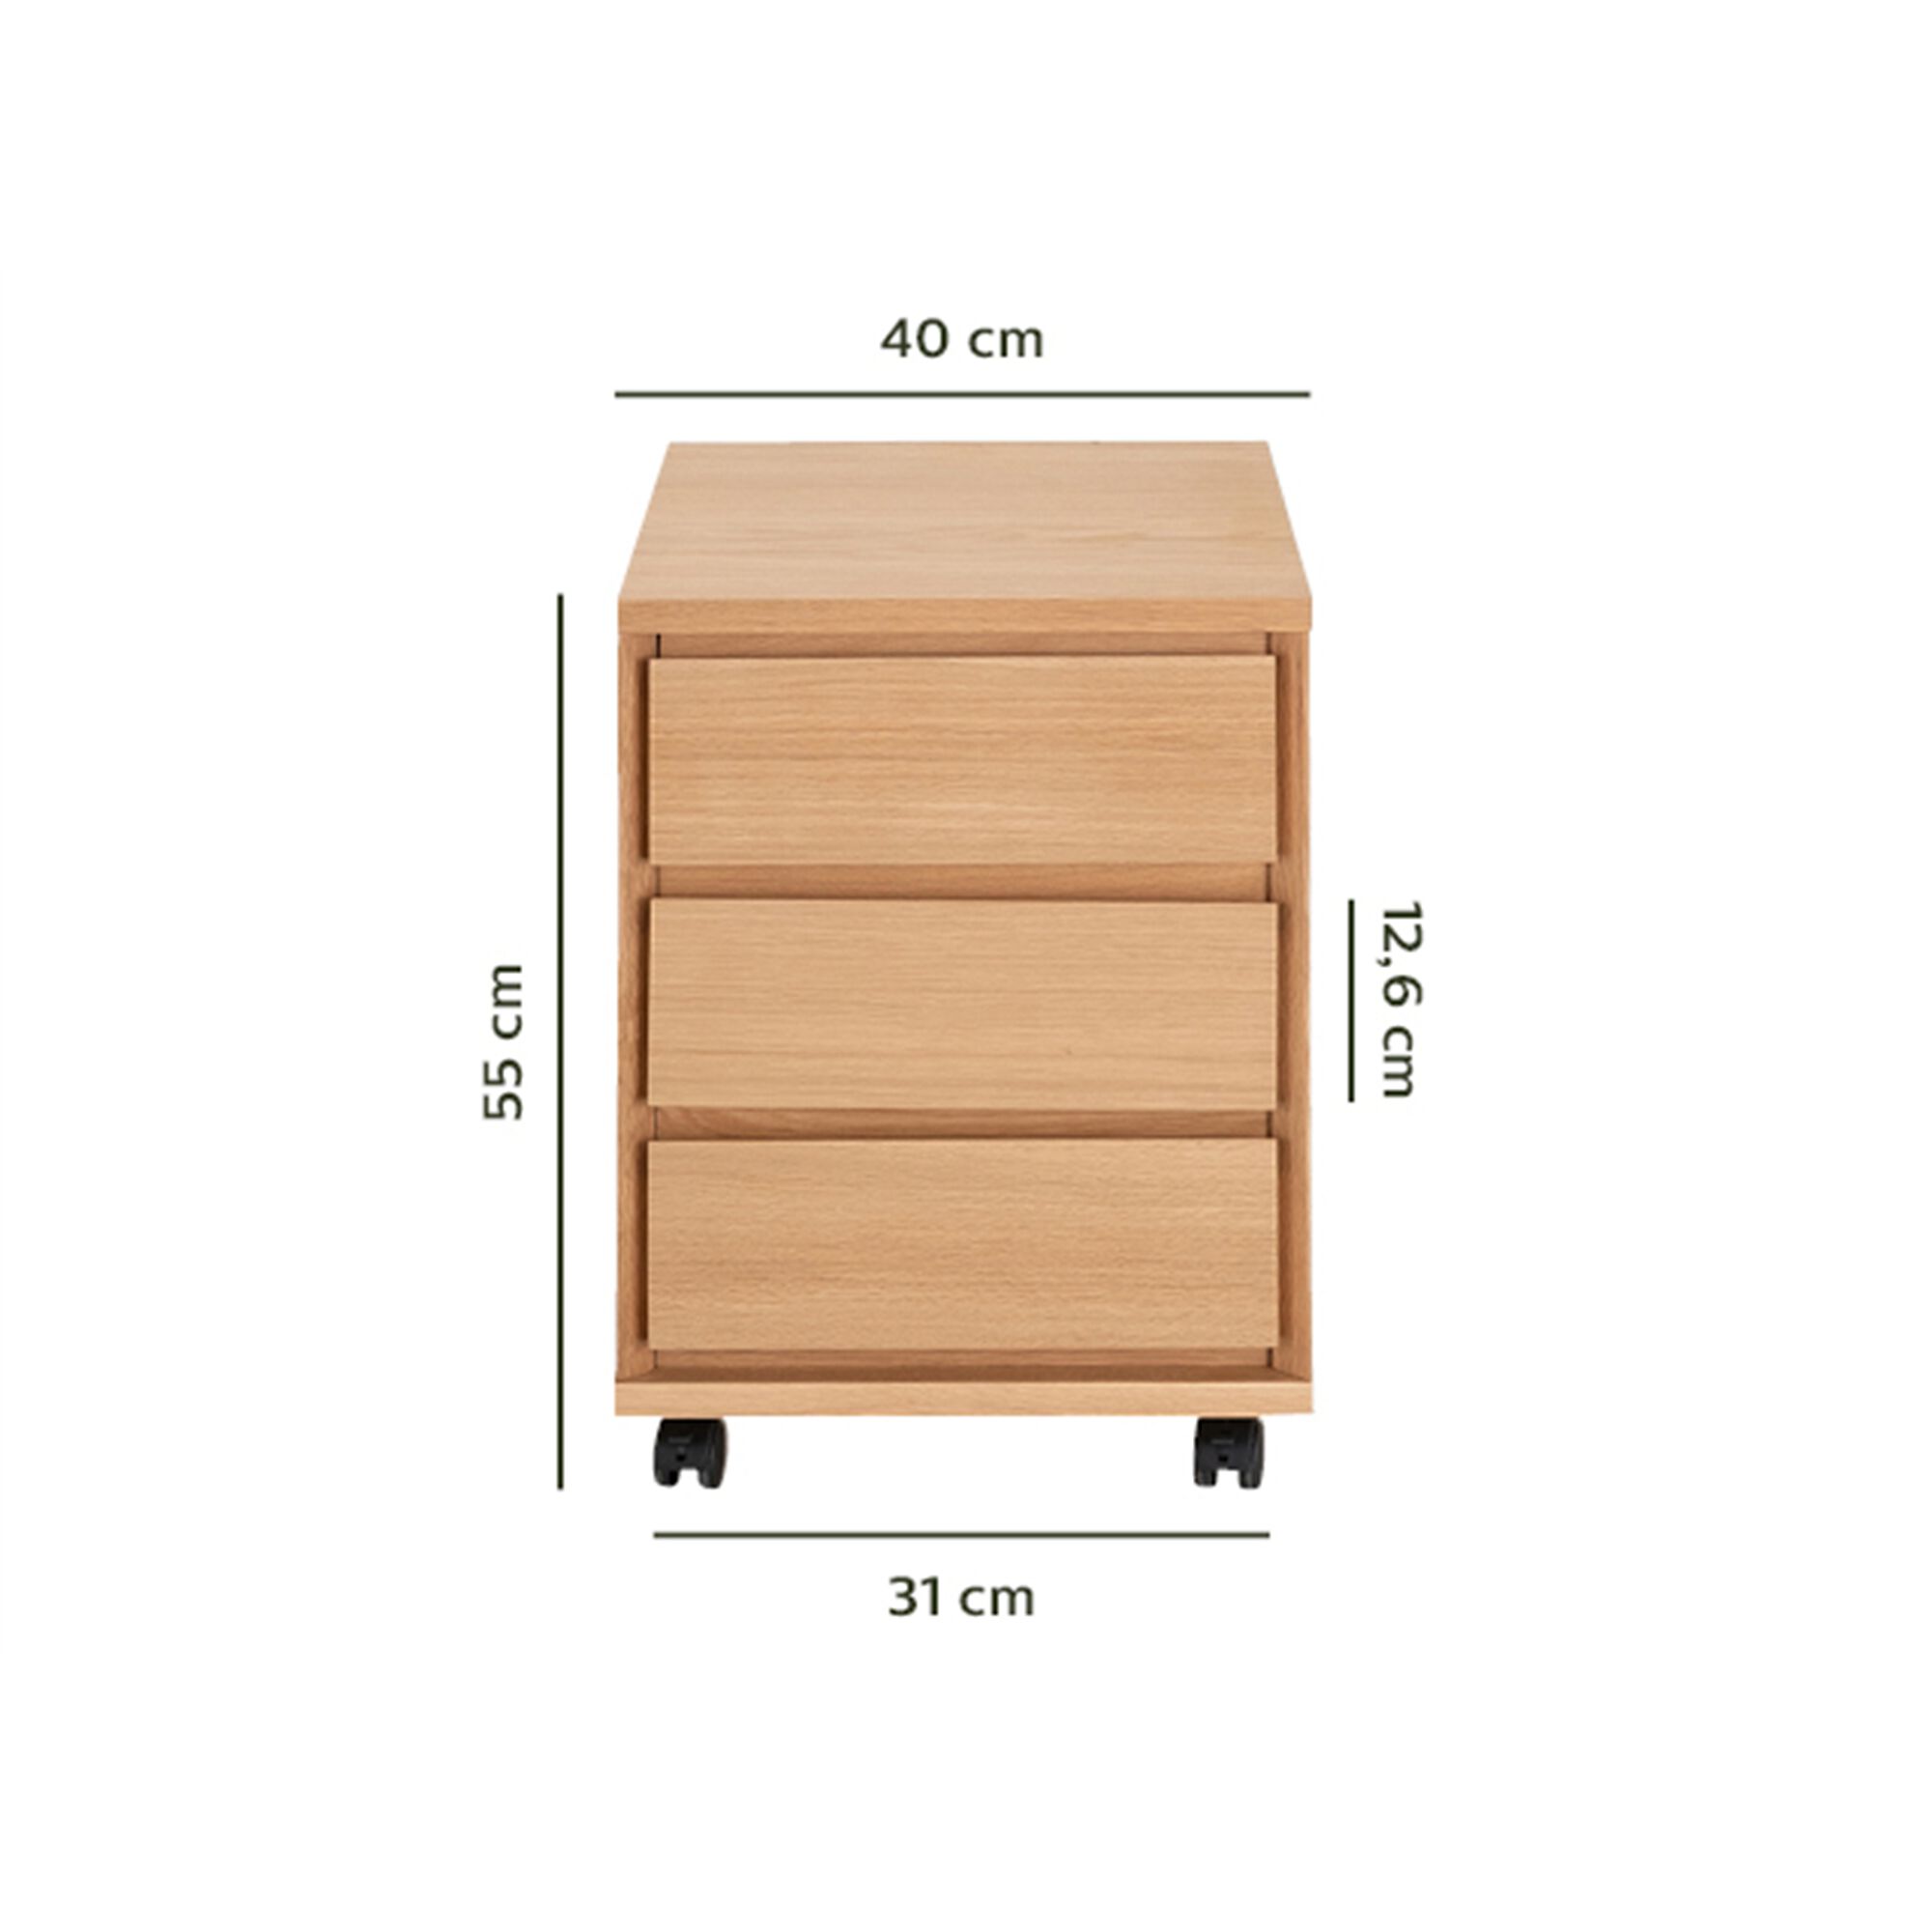 Caisson de bureau 3 tiroirs en bois - naturel-AGOSTA